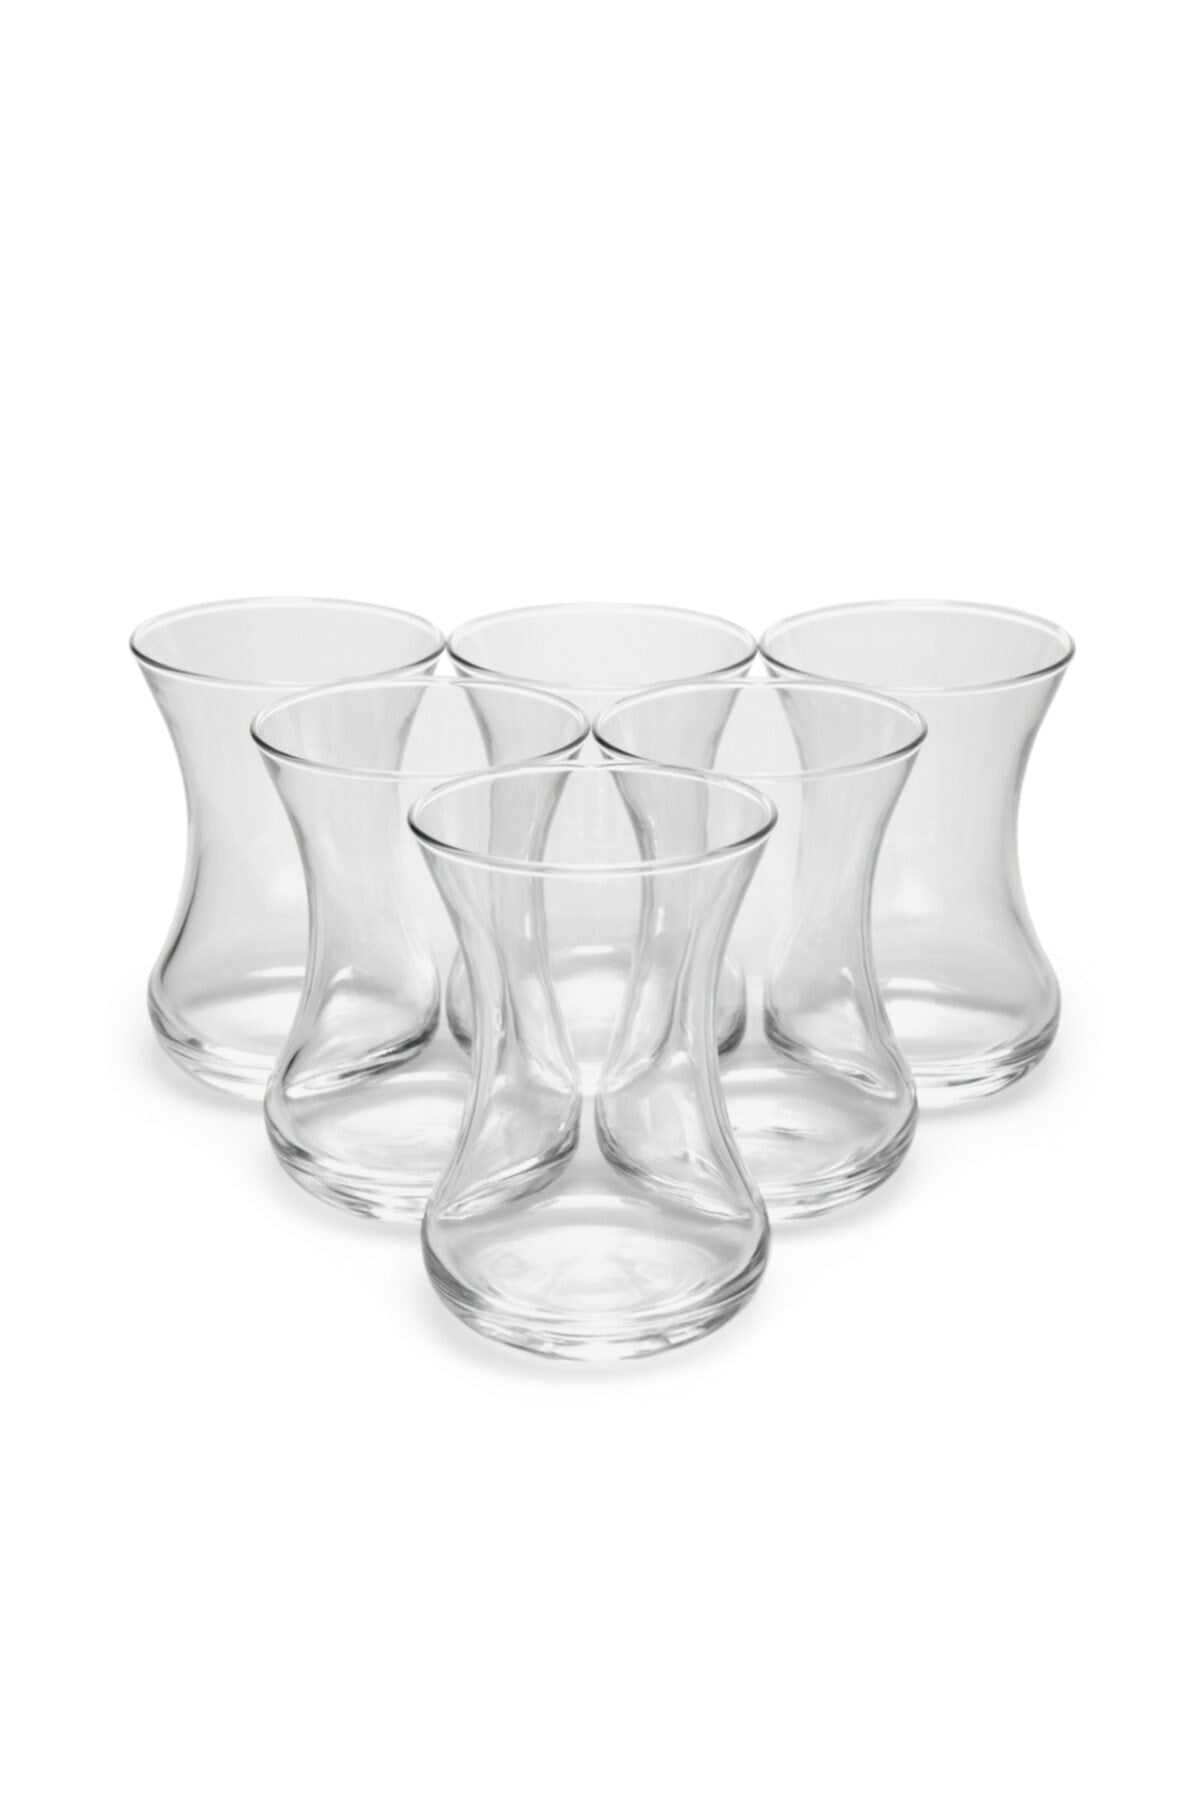 Turkish glass tea Set of 6 thin waisted, high quality glass coaster glass each 135cc made in Turkey